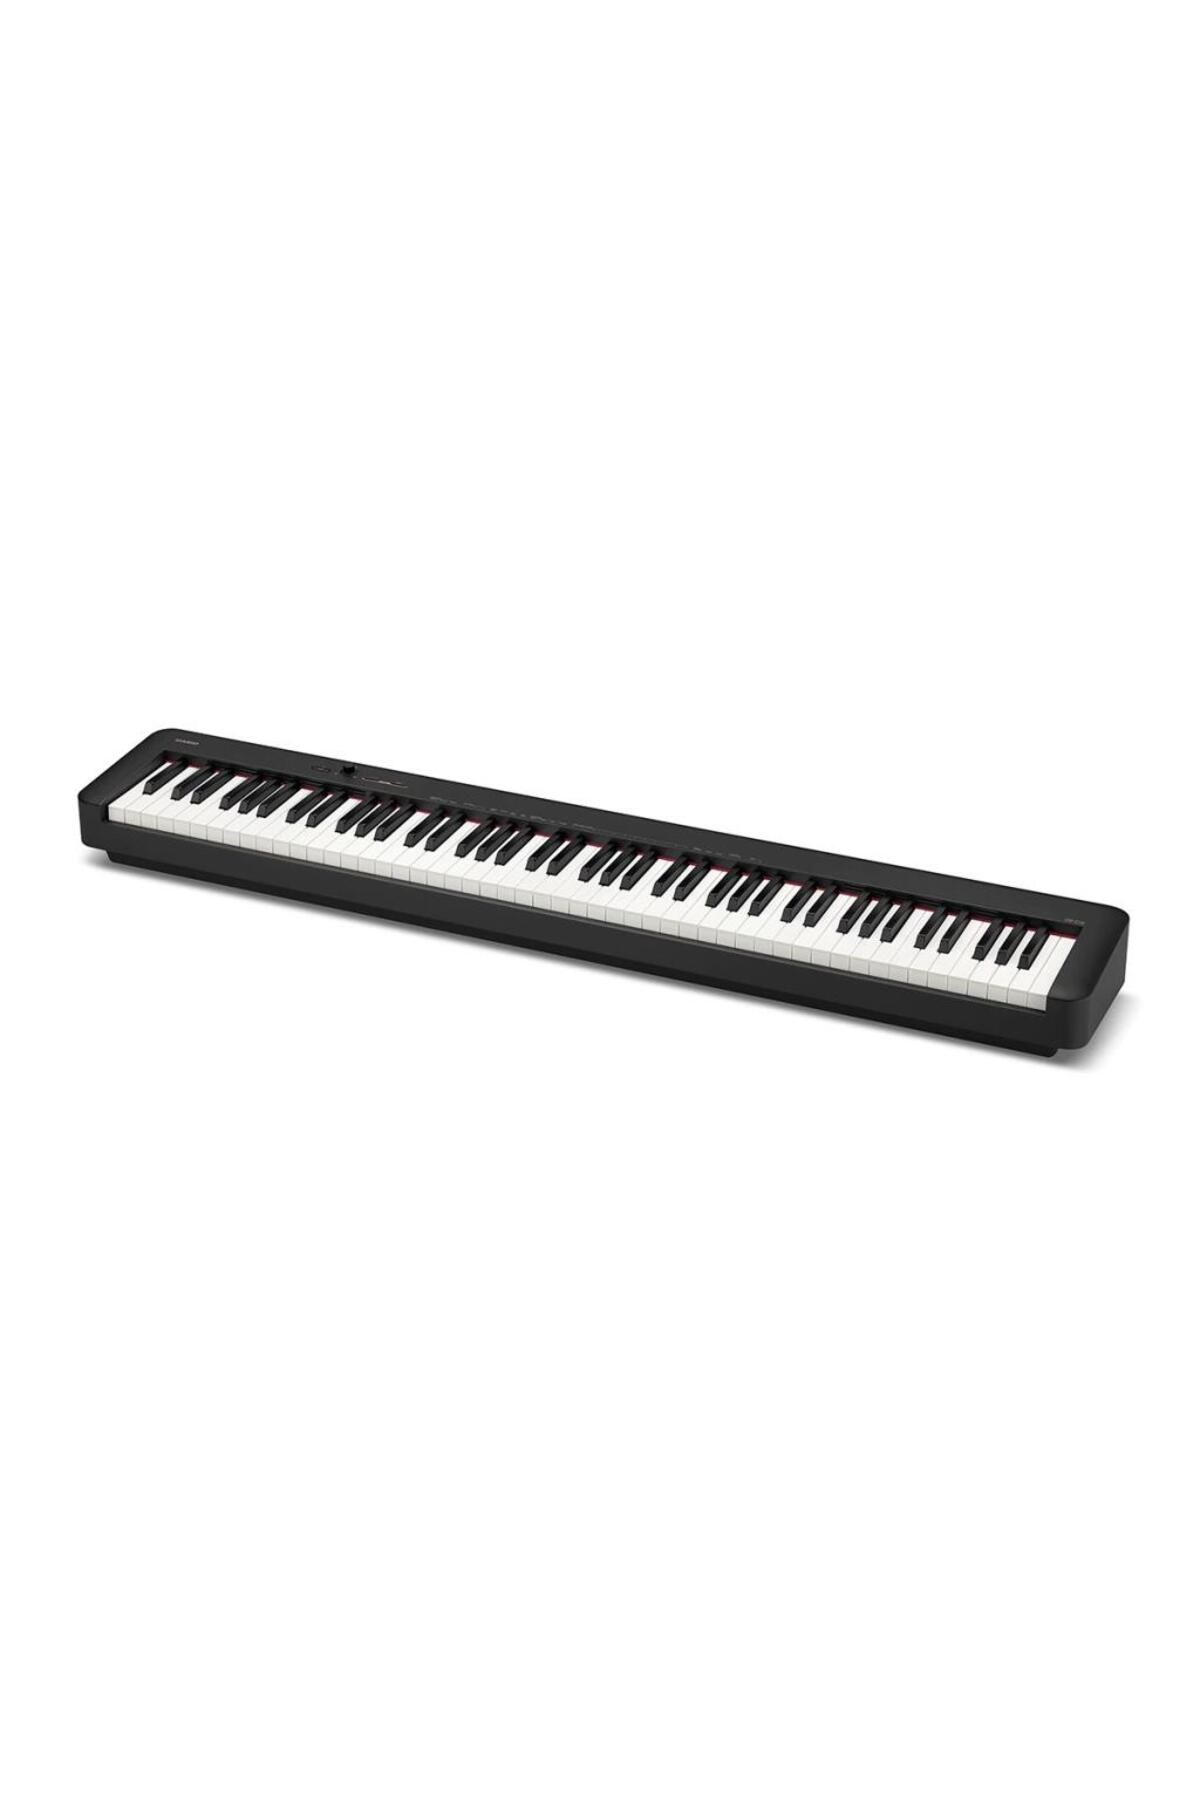 Casio Cdp-s110bkc2 Siyah Taşınabilir Dijital Piyano